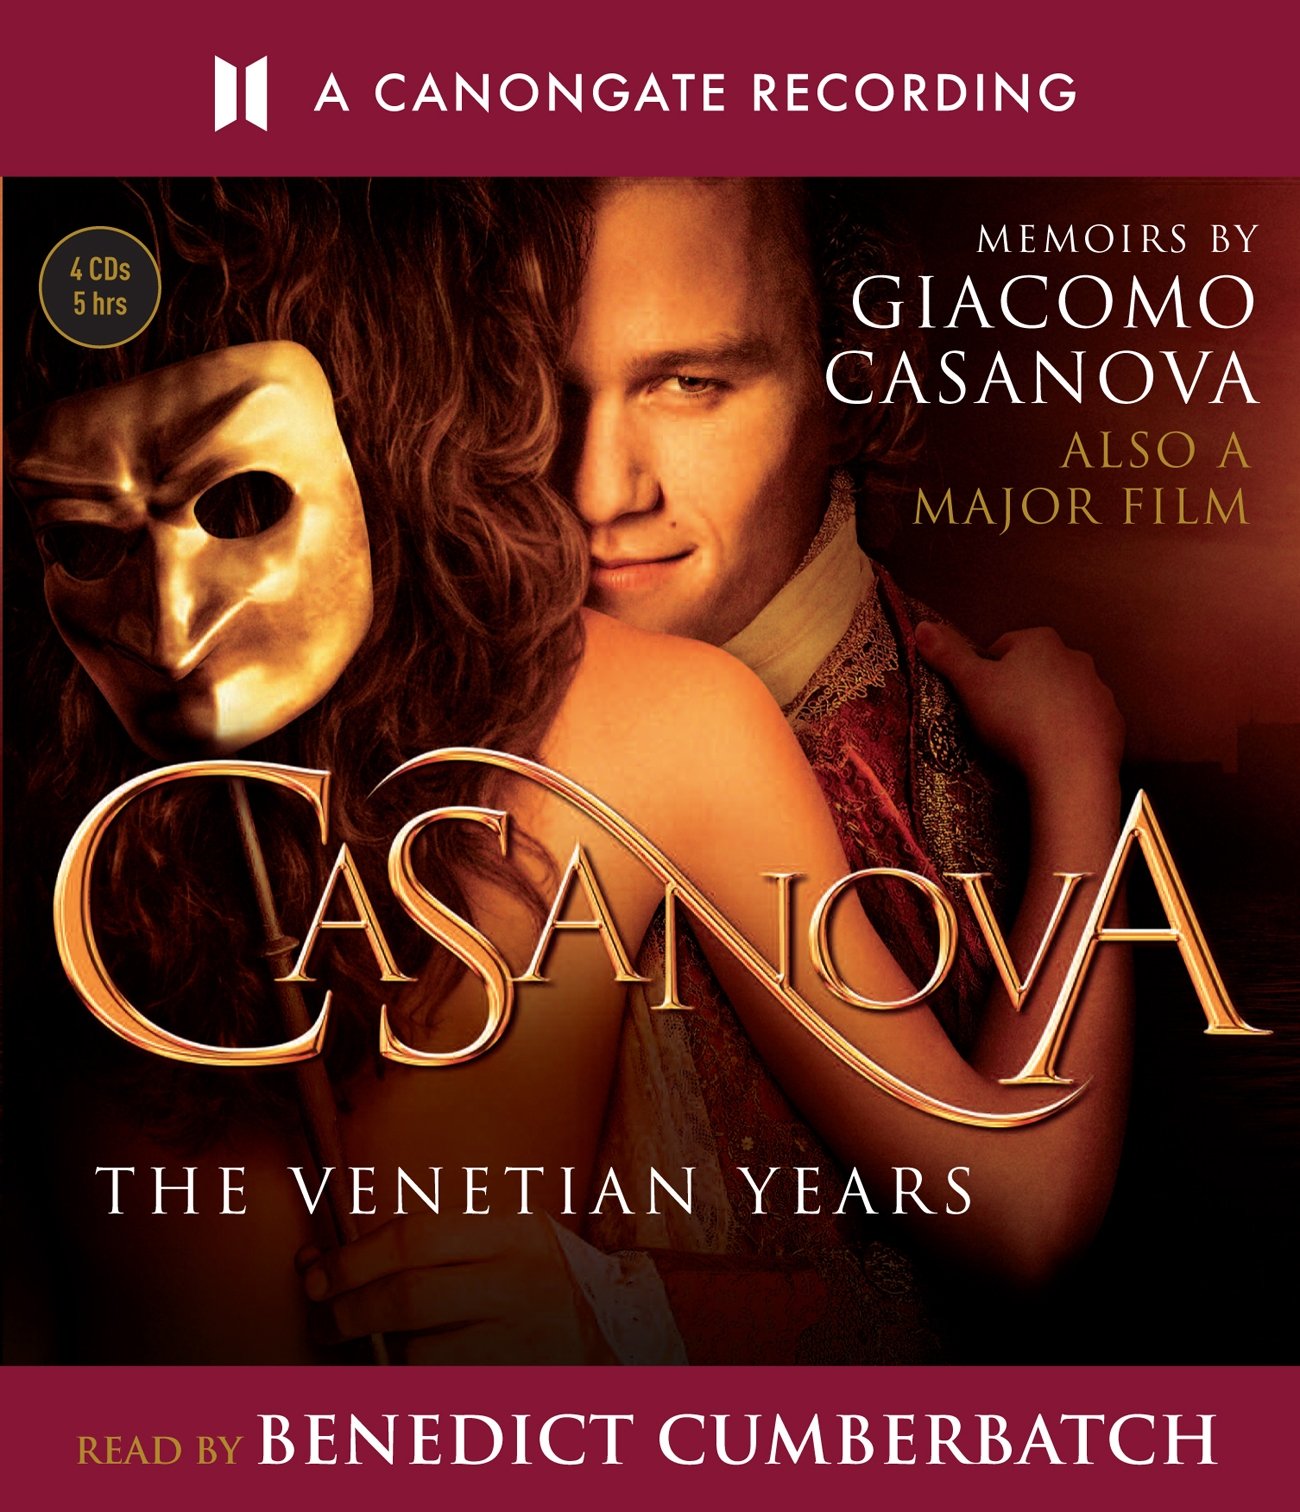 Casanova bbc download link full